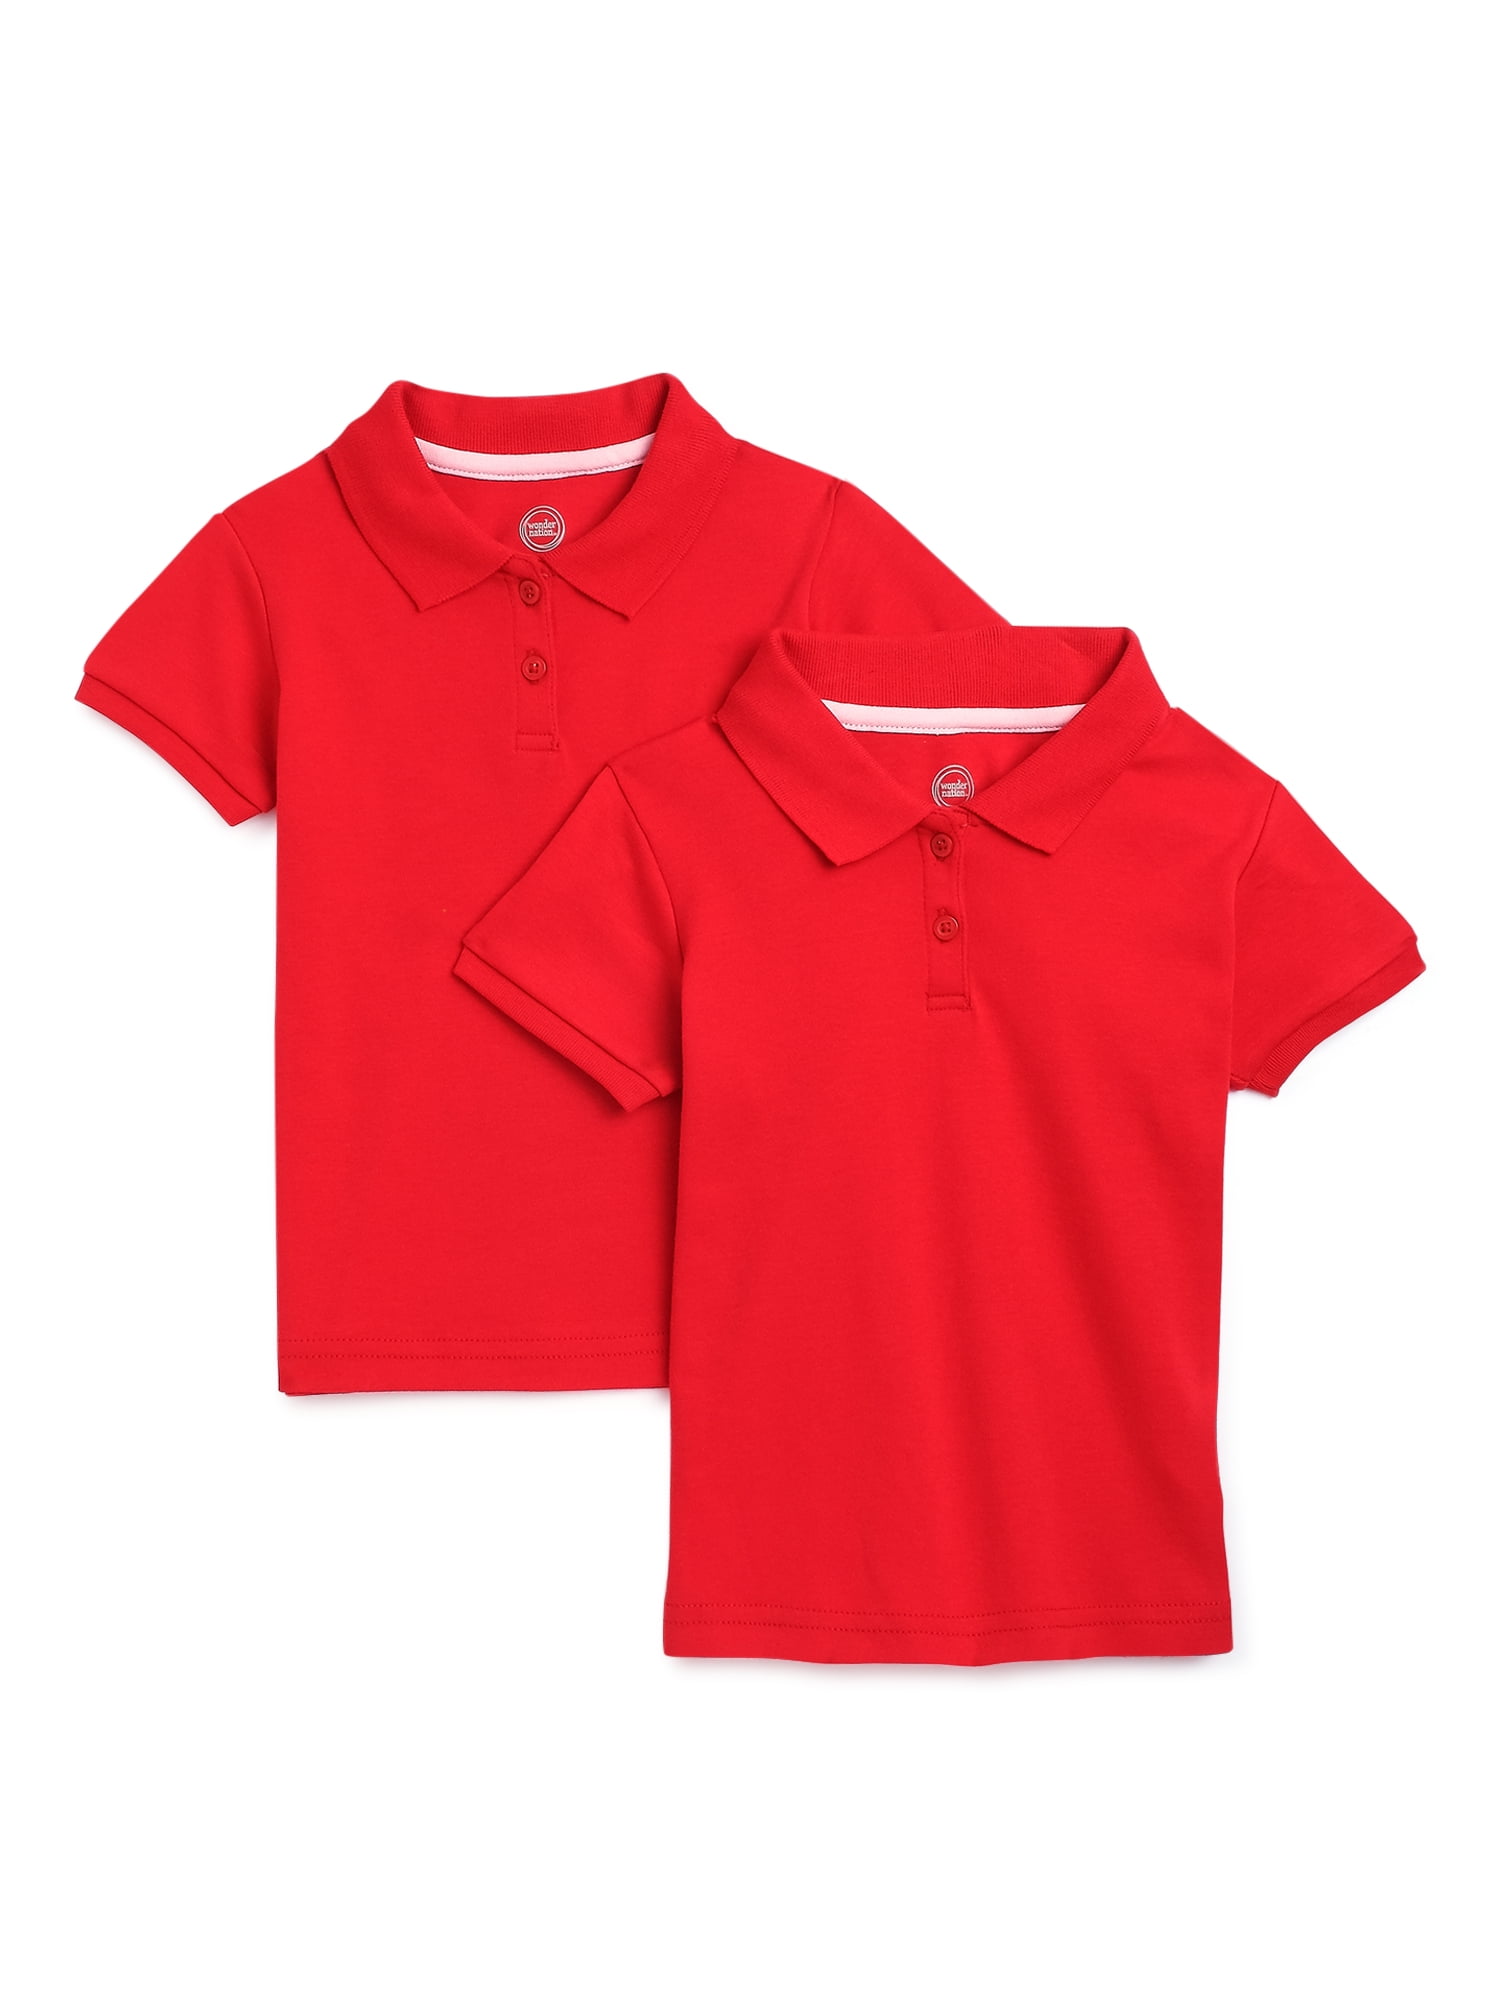 Essentials Girls and Toddlers' Uniform Short-Sleeve Interlock Polo Shirt Multipacks 